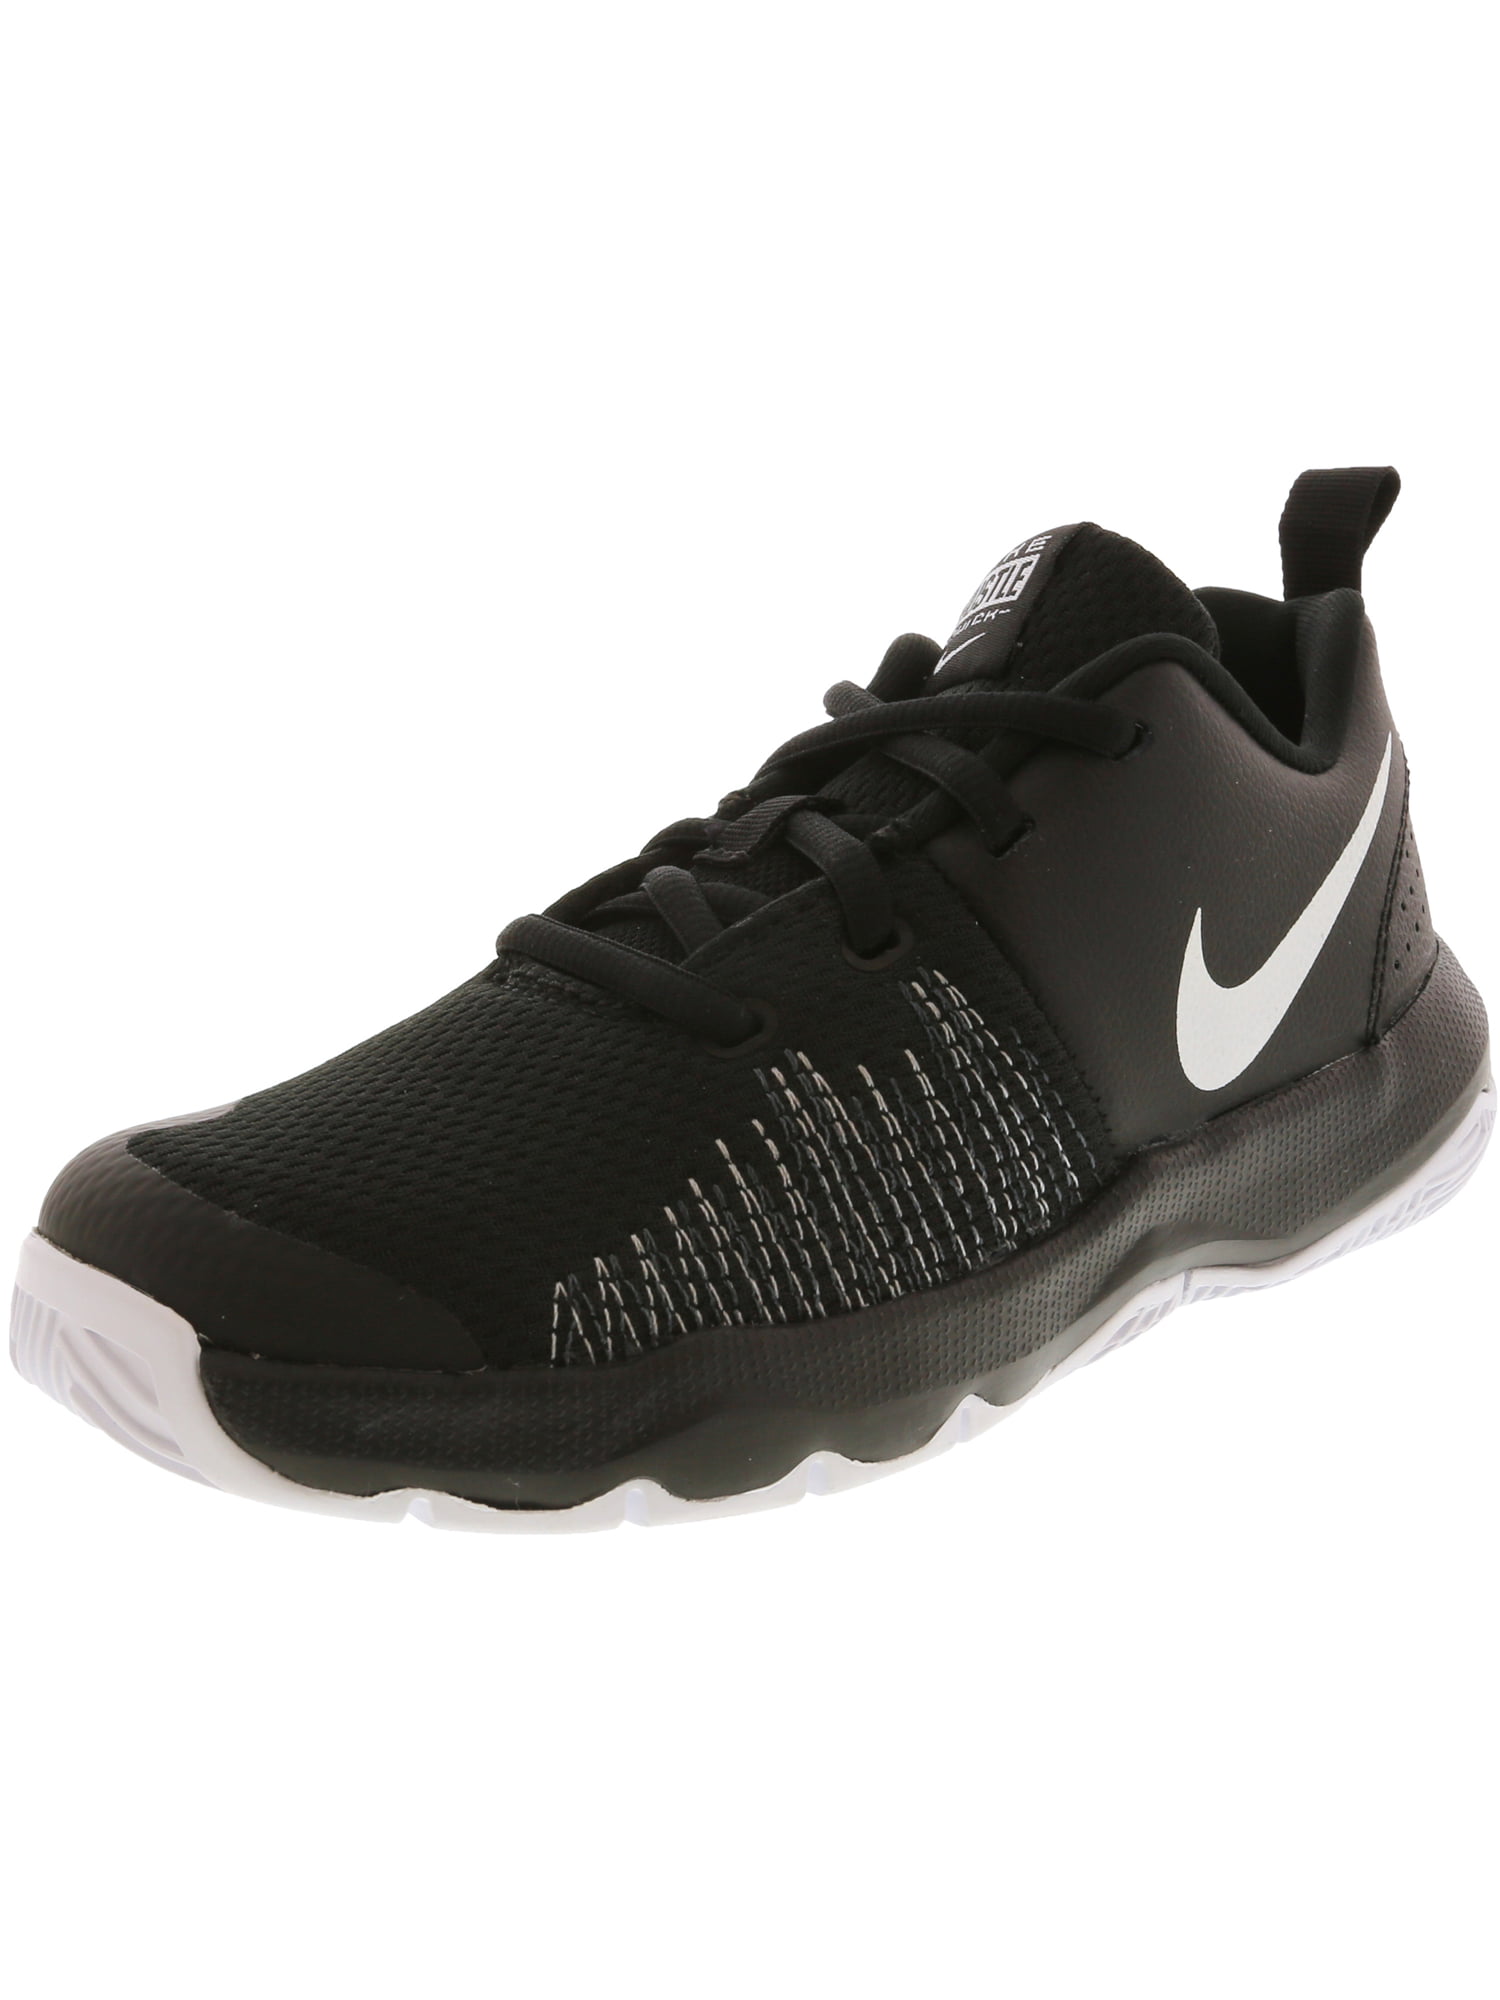 Nike - Nike Team Hustle Quick Black / White Leather Basketball Shoe ...